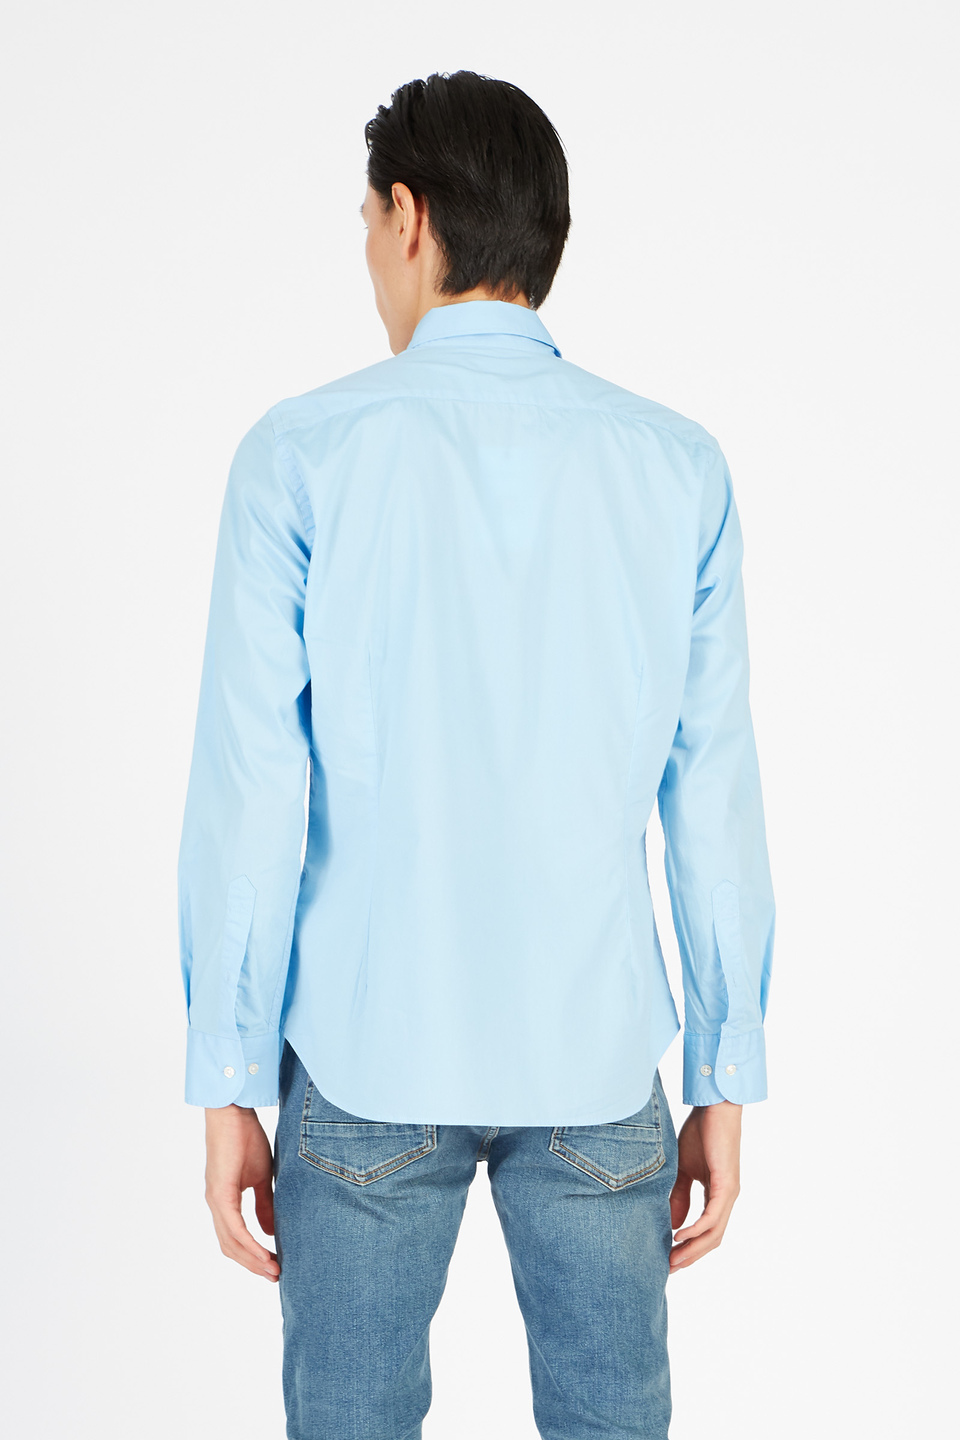 Men's shirt slim fit | La Martina - Official Online Shop